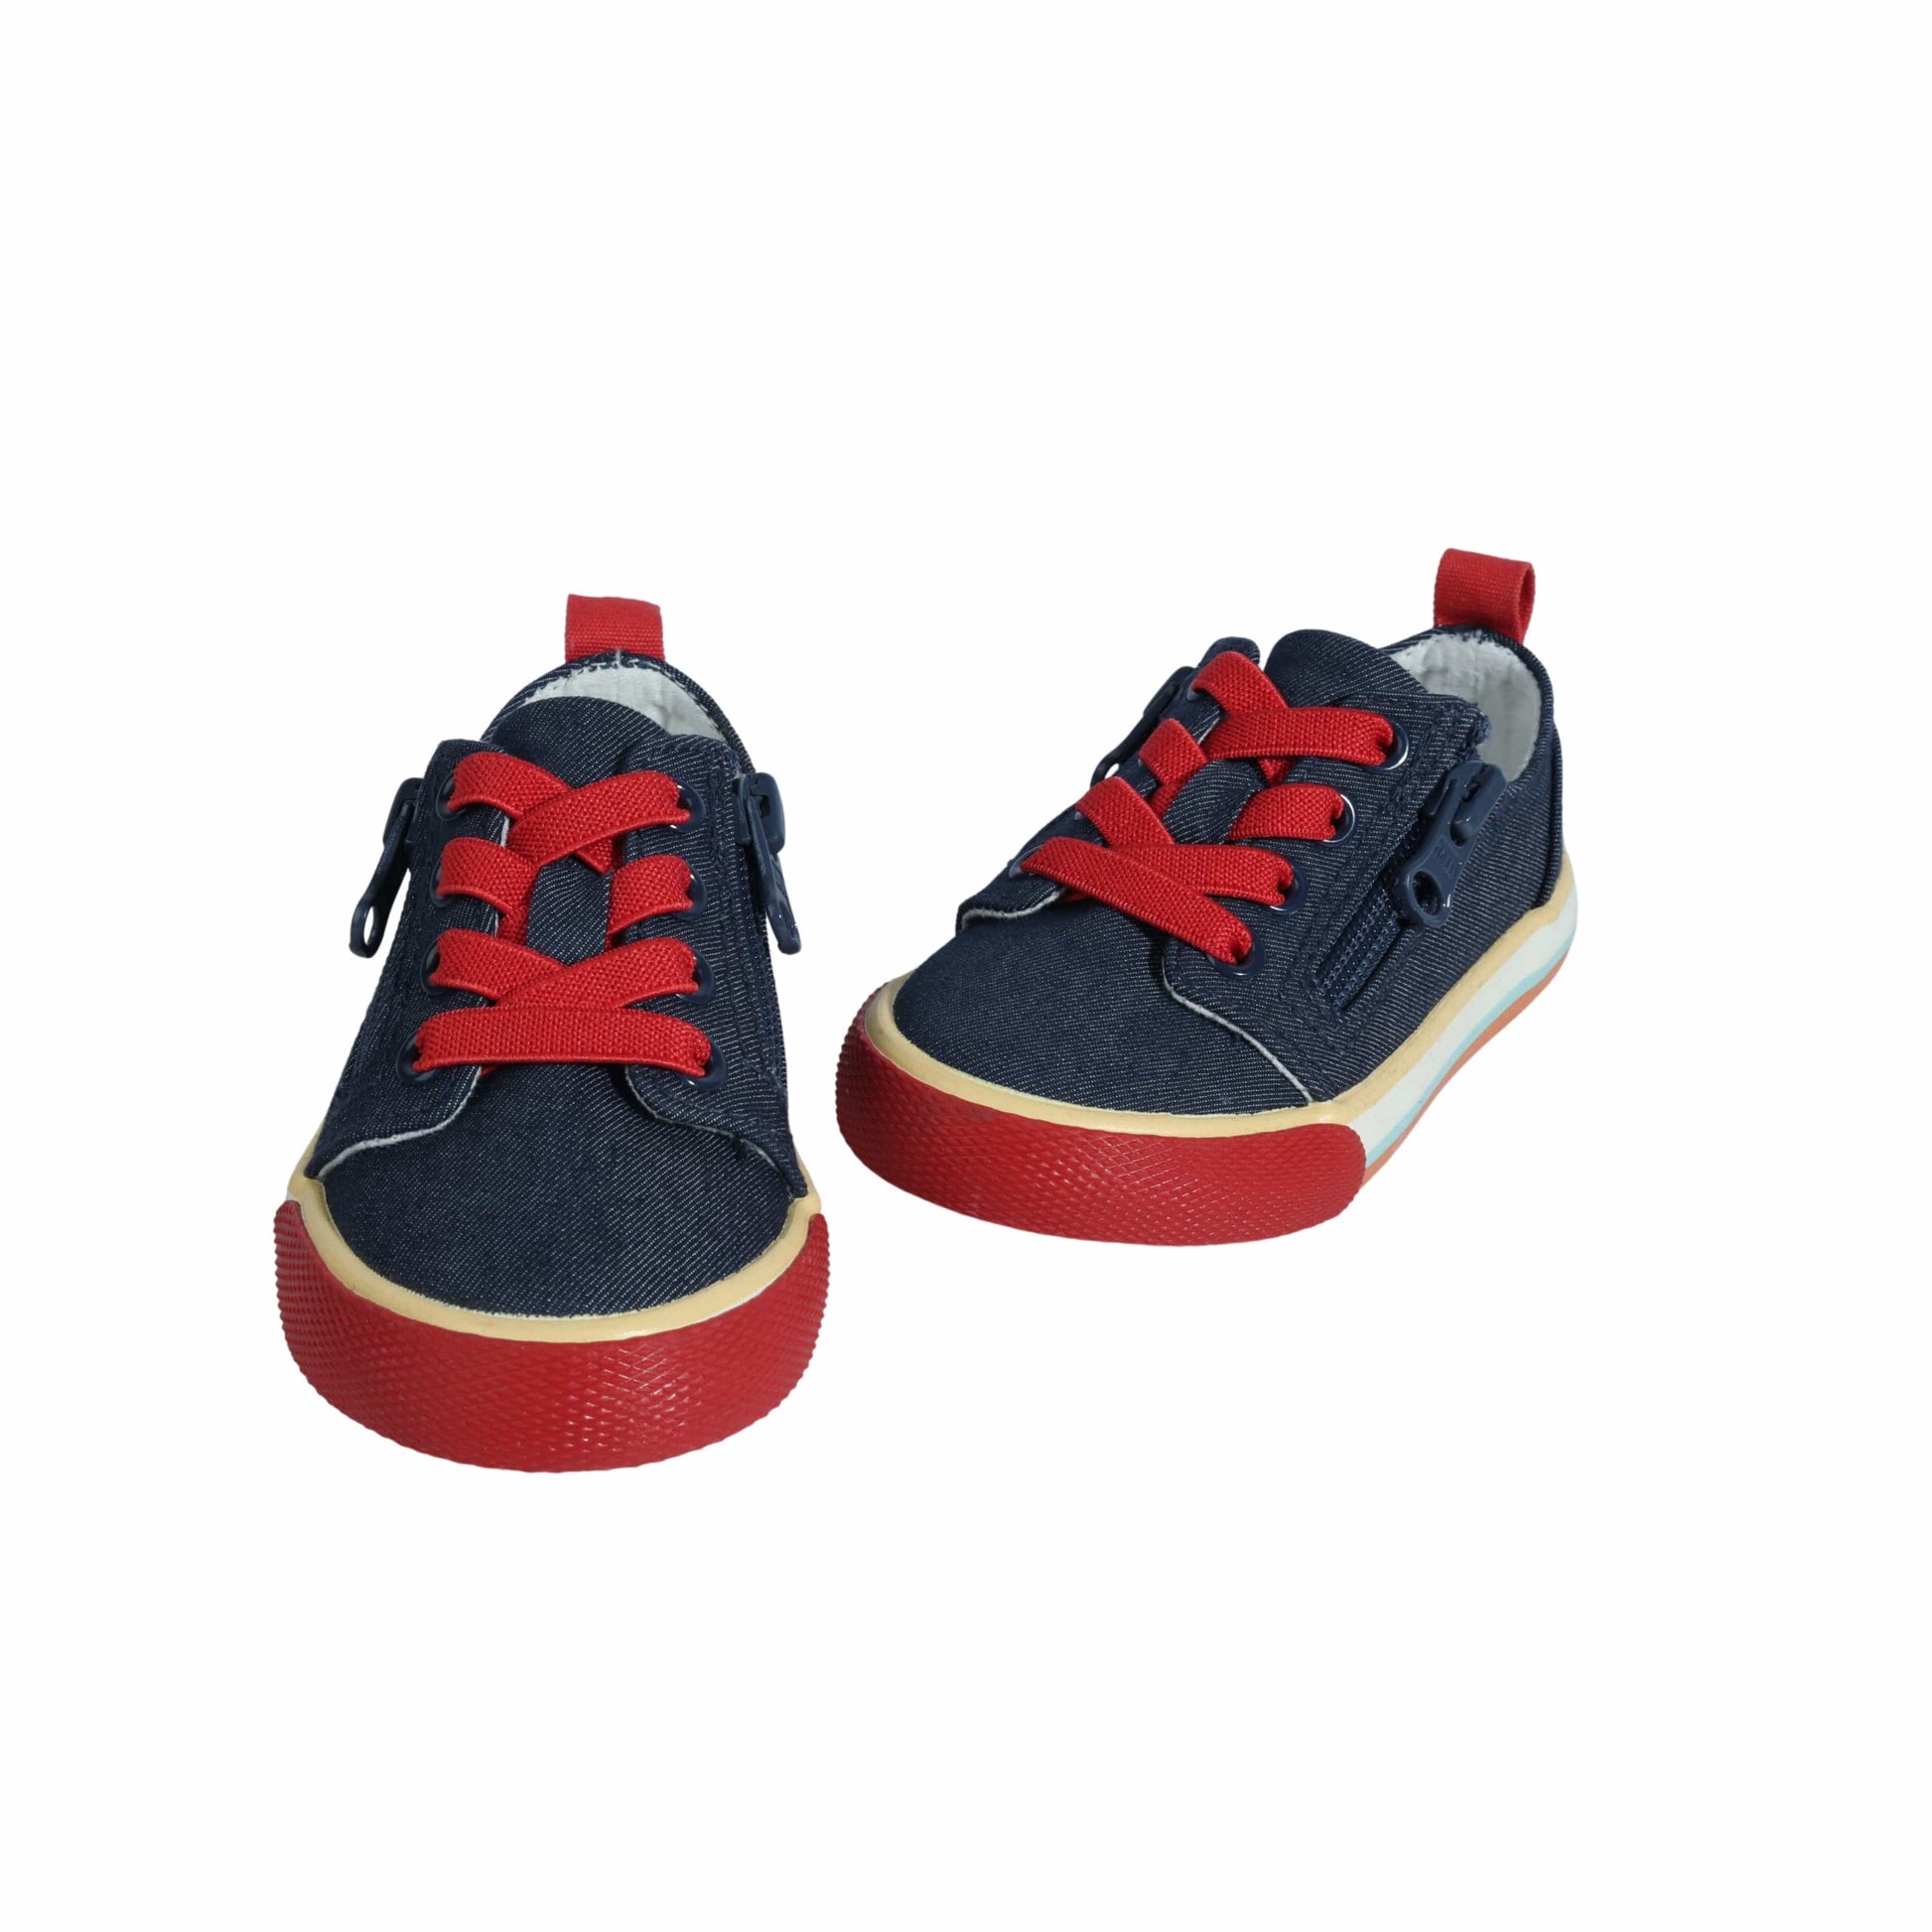 CAT & JACK Baby Shoes 22 / Navy CAT & JACK - Baby - Side Zipper Sneakers